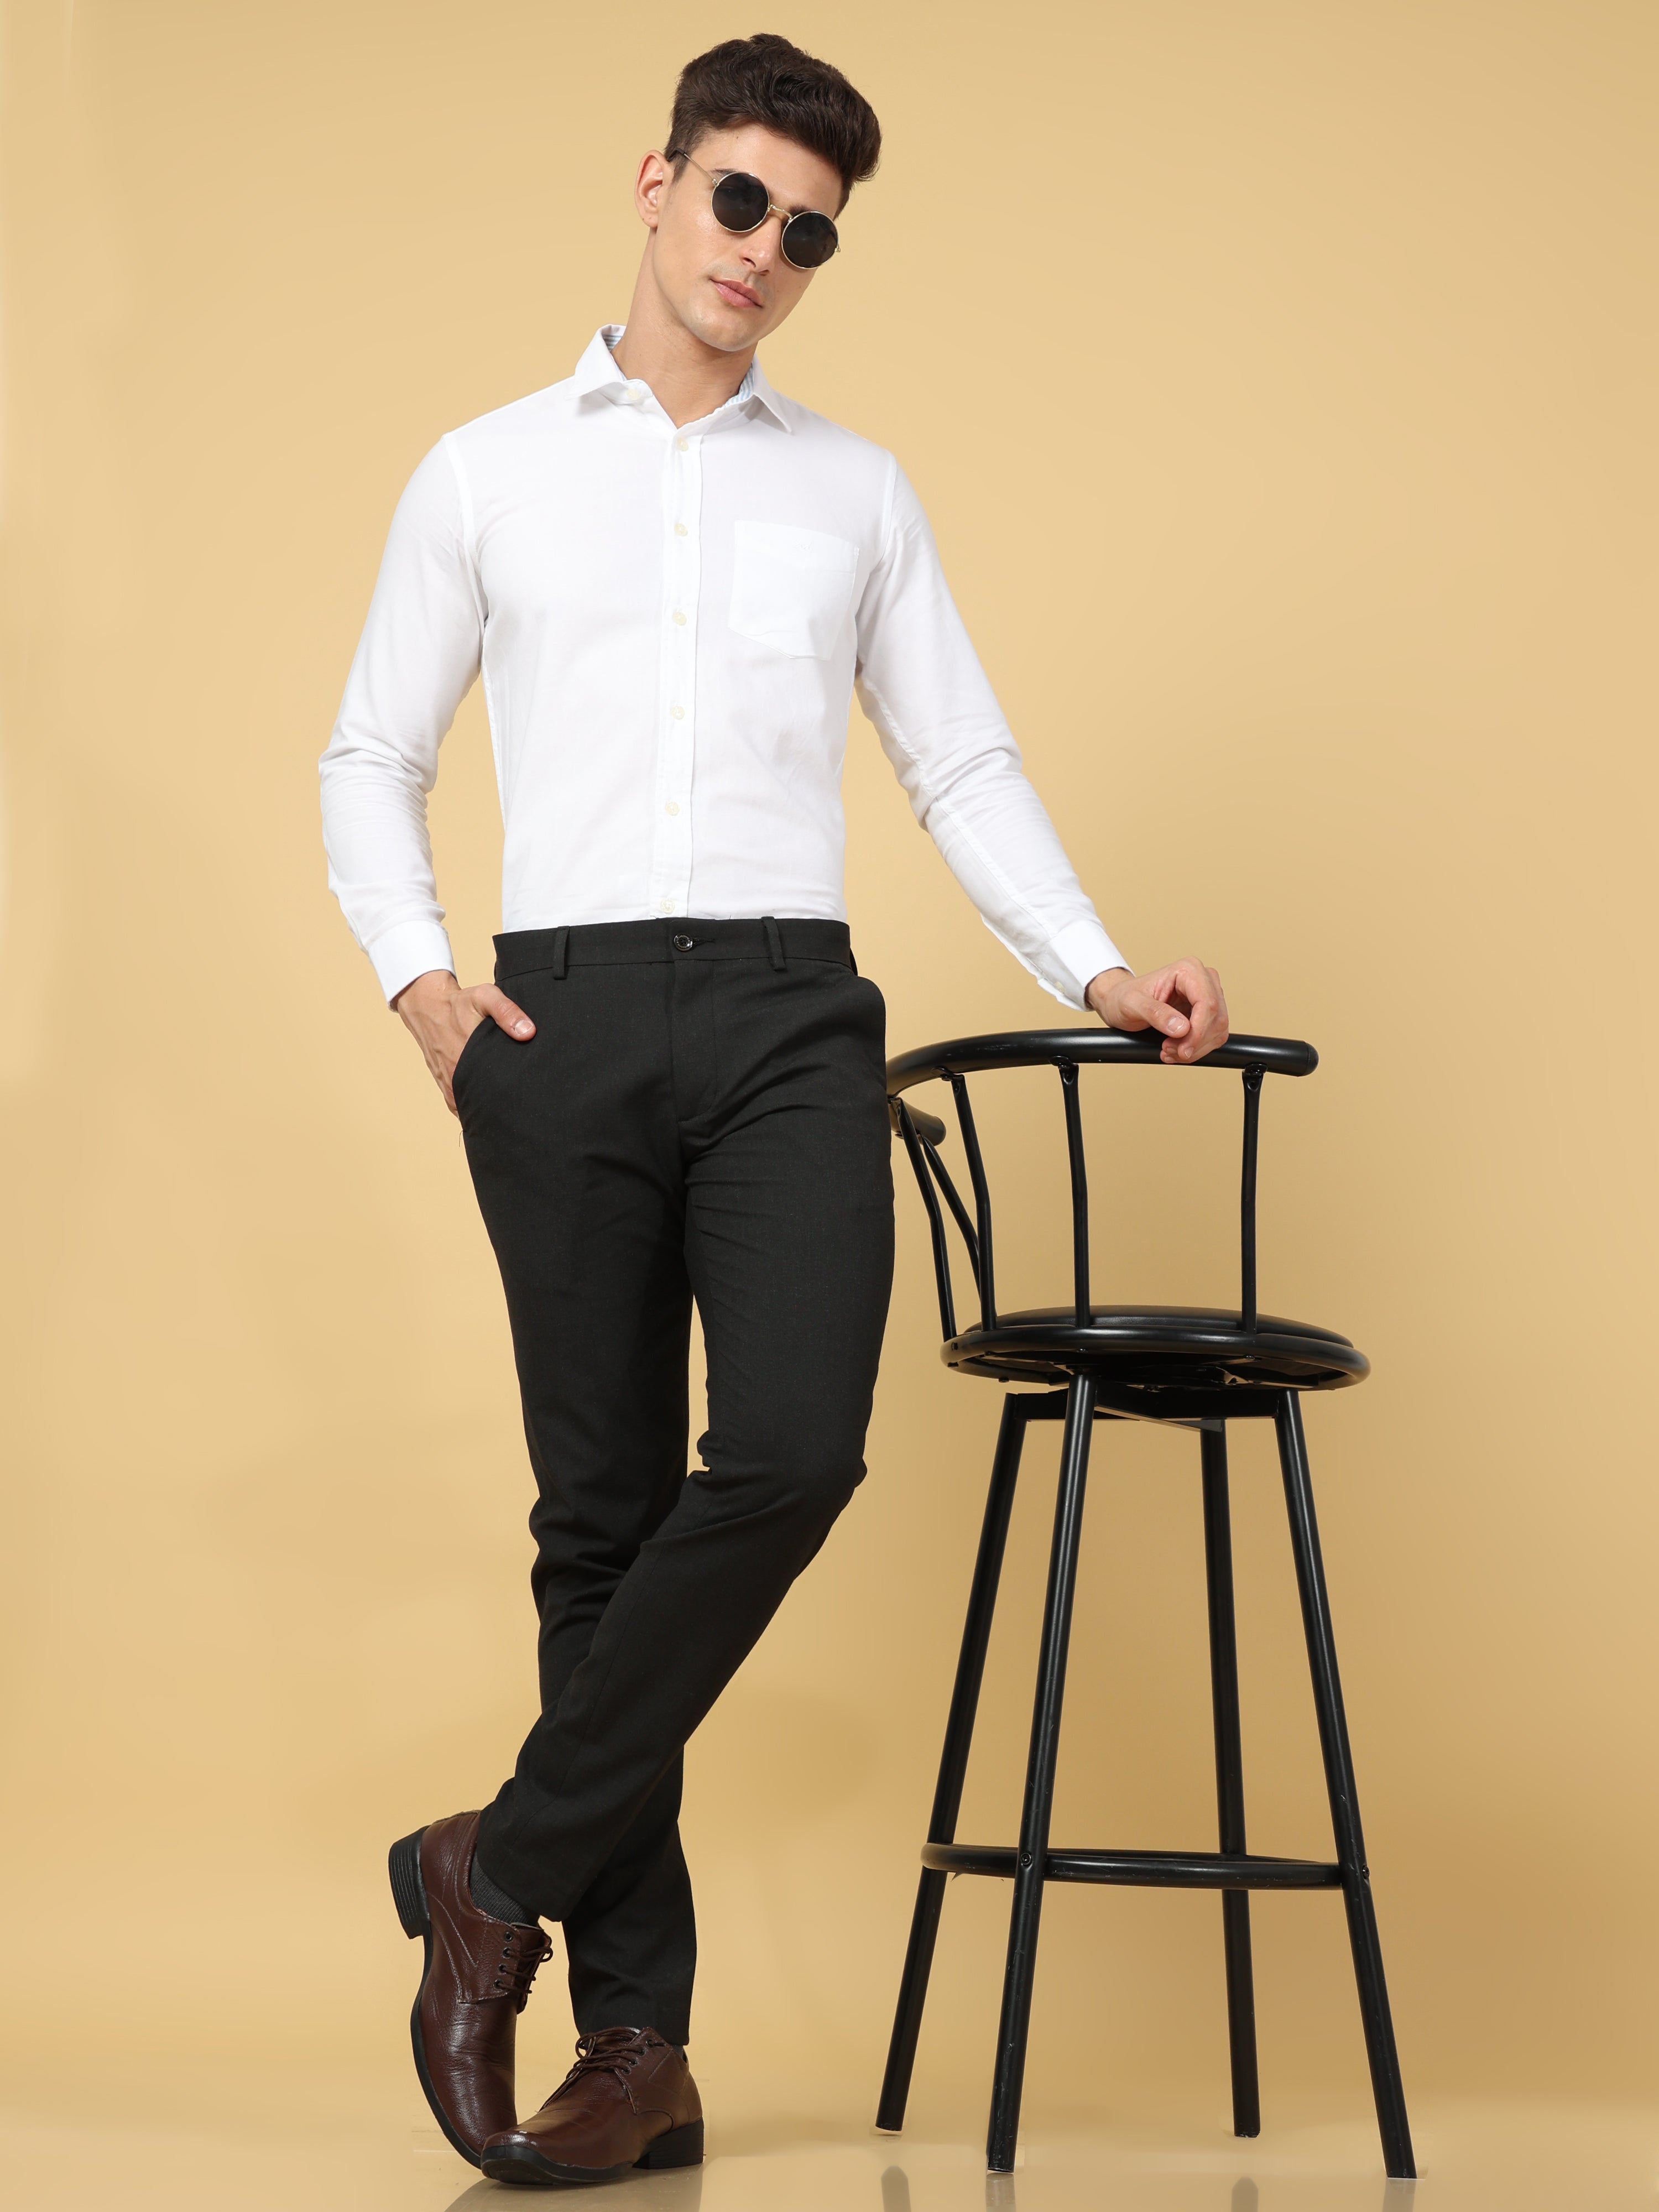 Buy Black Formal Trousers Online in India at Best Price - Westside